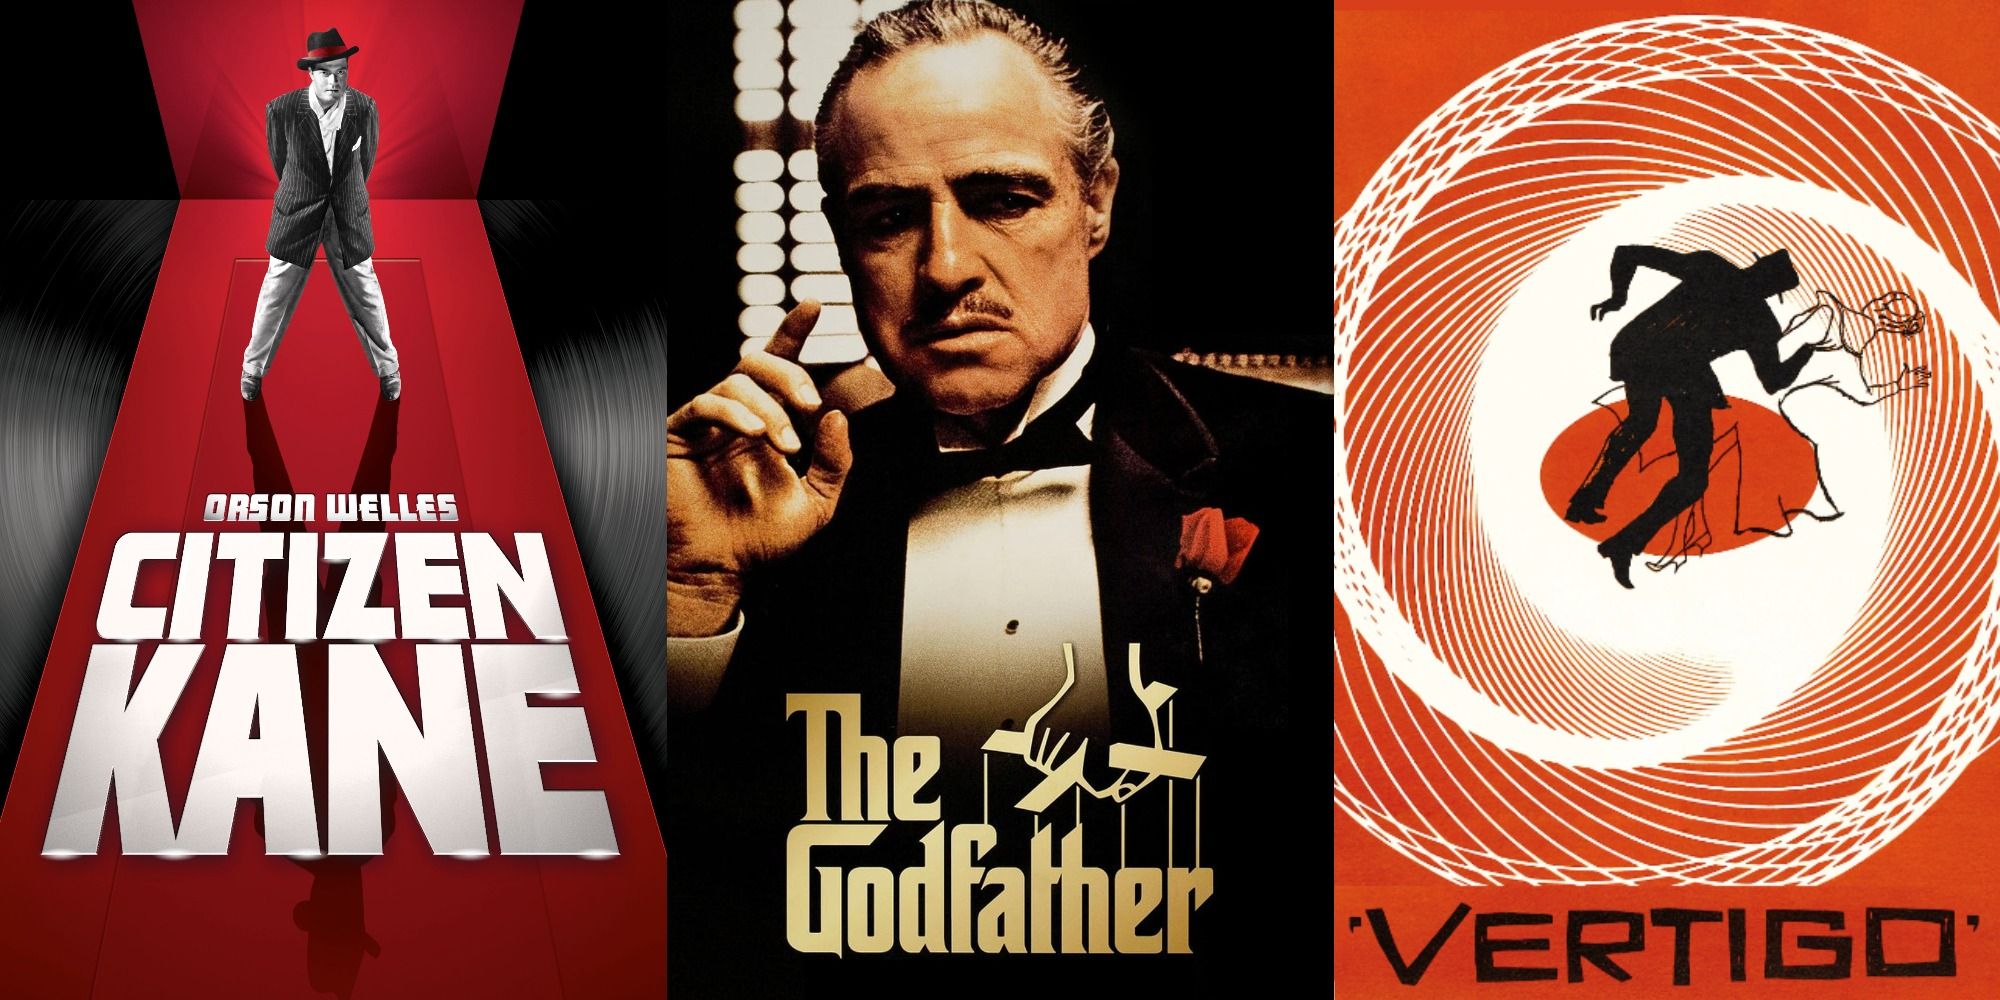 combined posters of Marlon Brando in The Godfather, Vertigo, and Citizen Kane